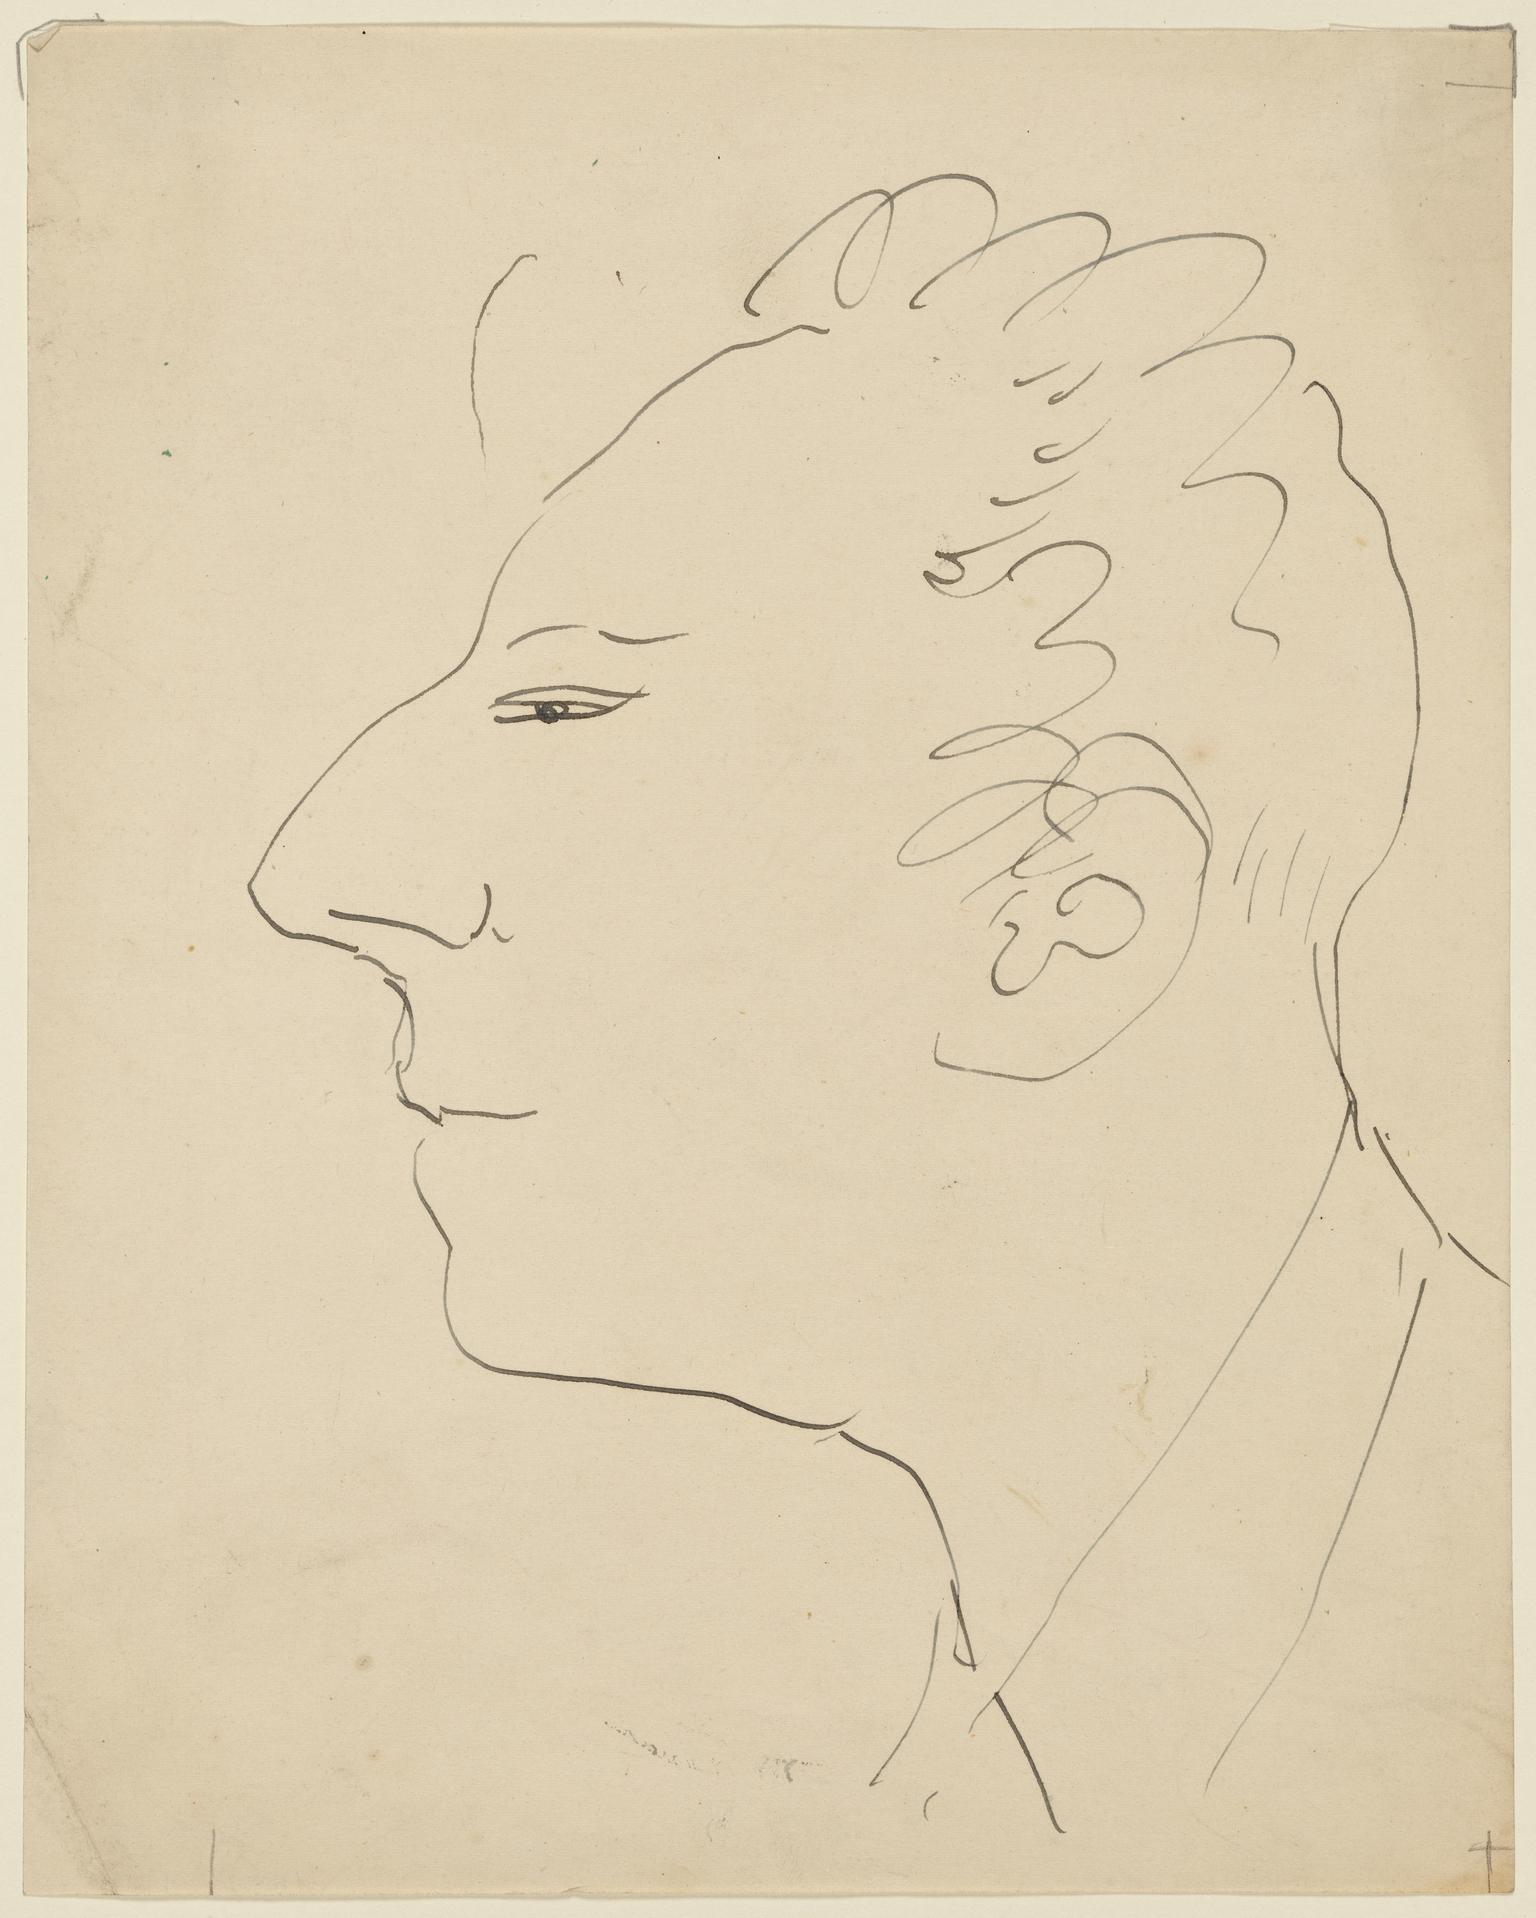 Caricature sketch of a Man's head